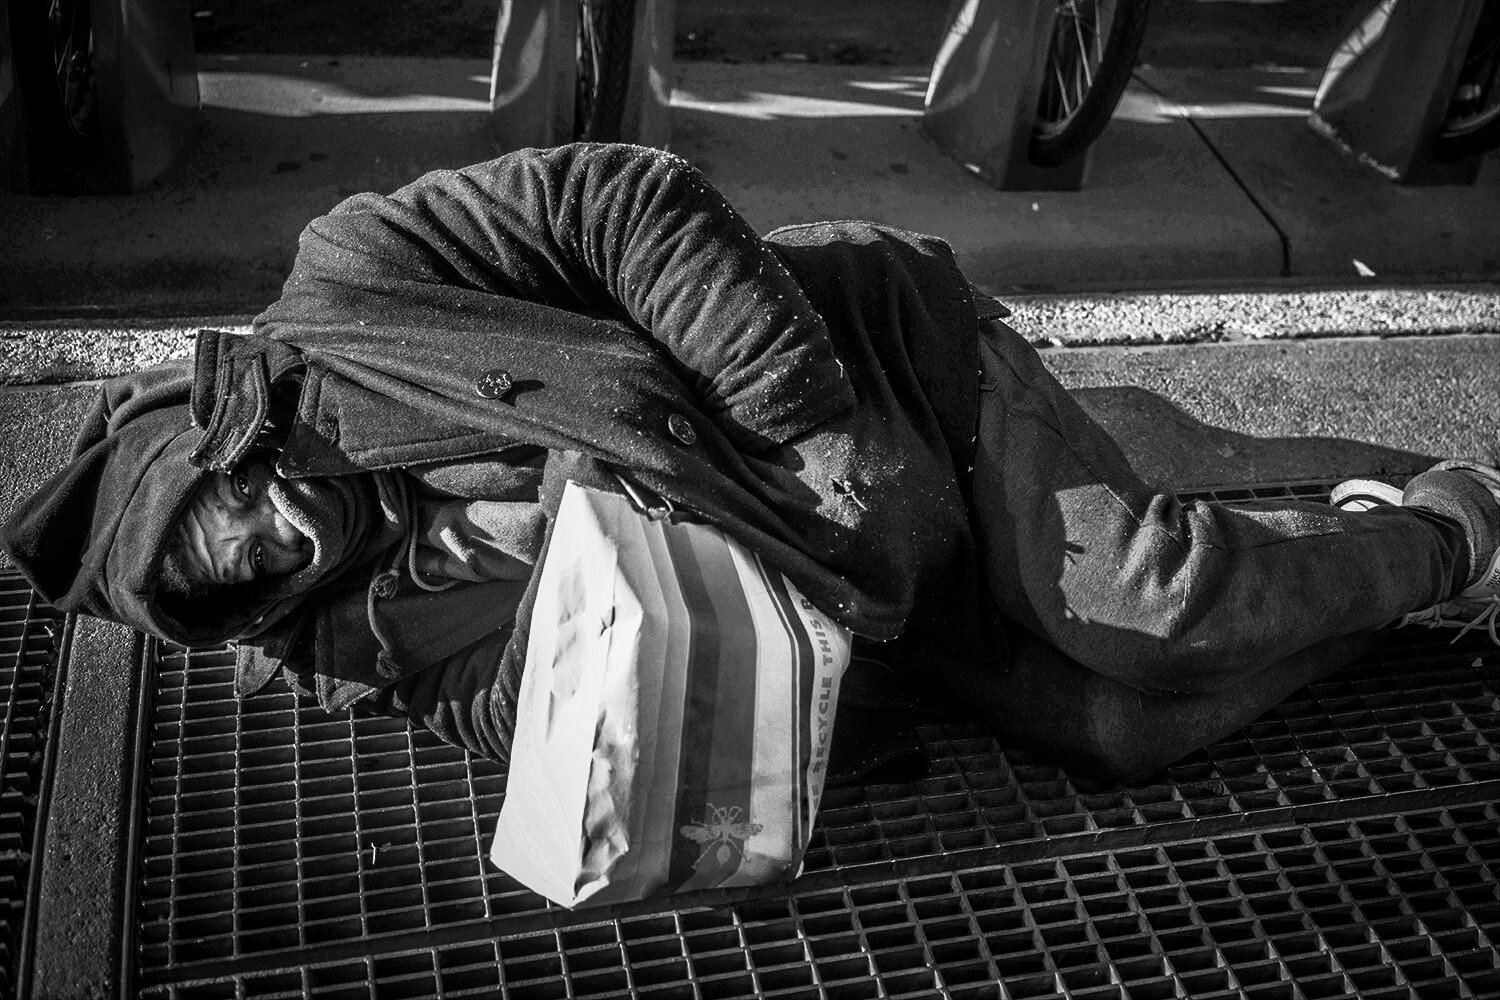 NYC_Street_2018_Homeless_Man_On_Subway_Grate-003crp.jpg